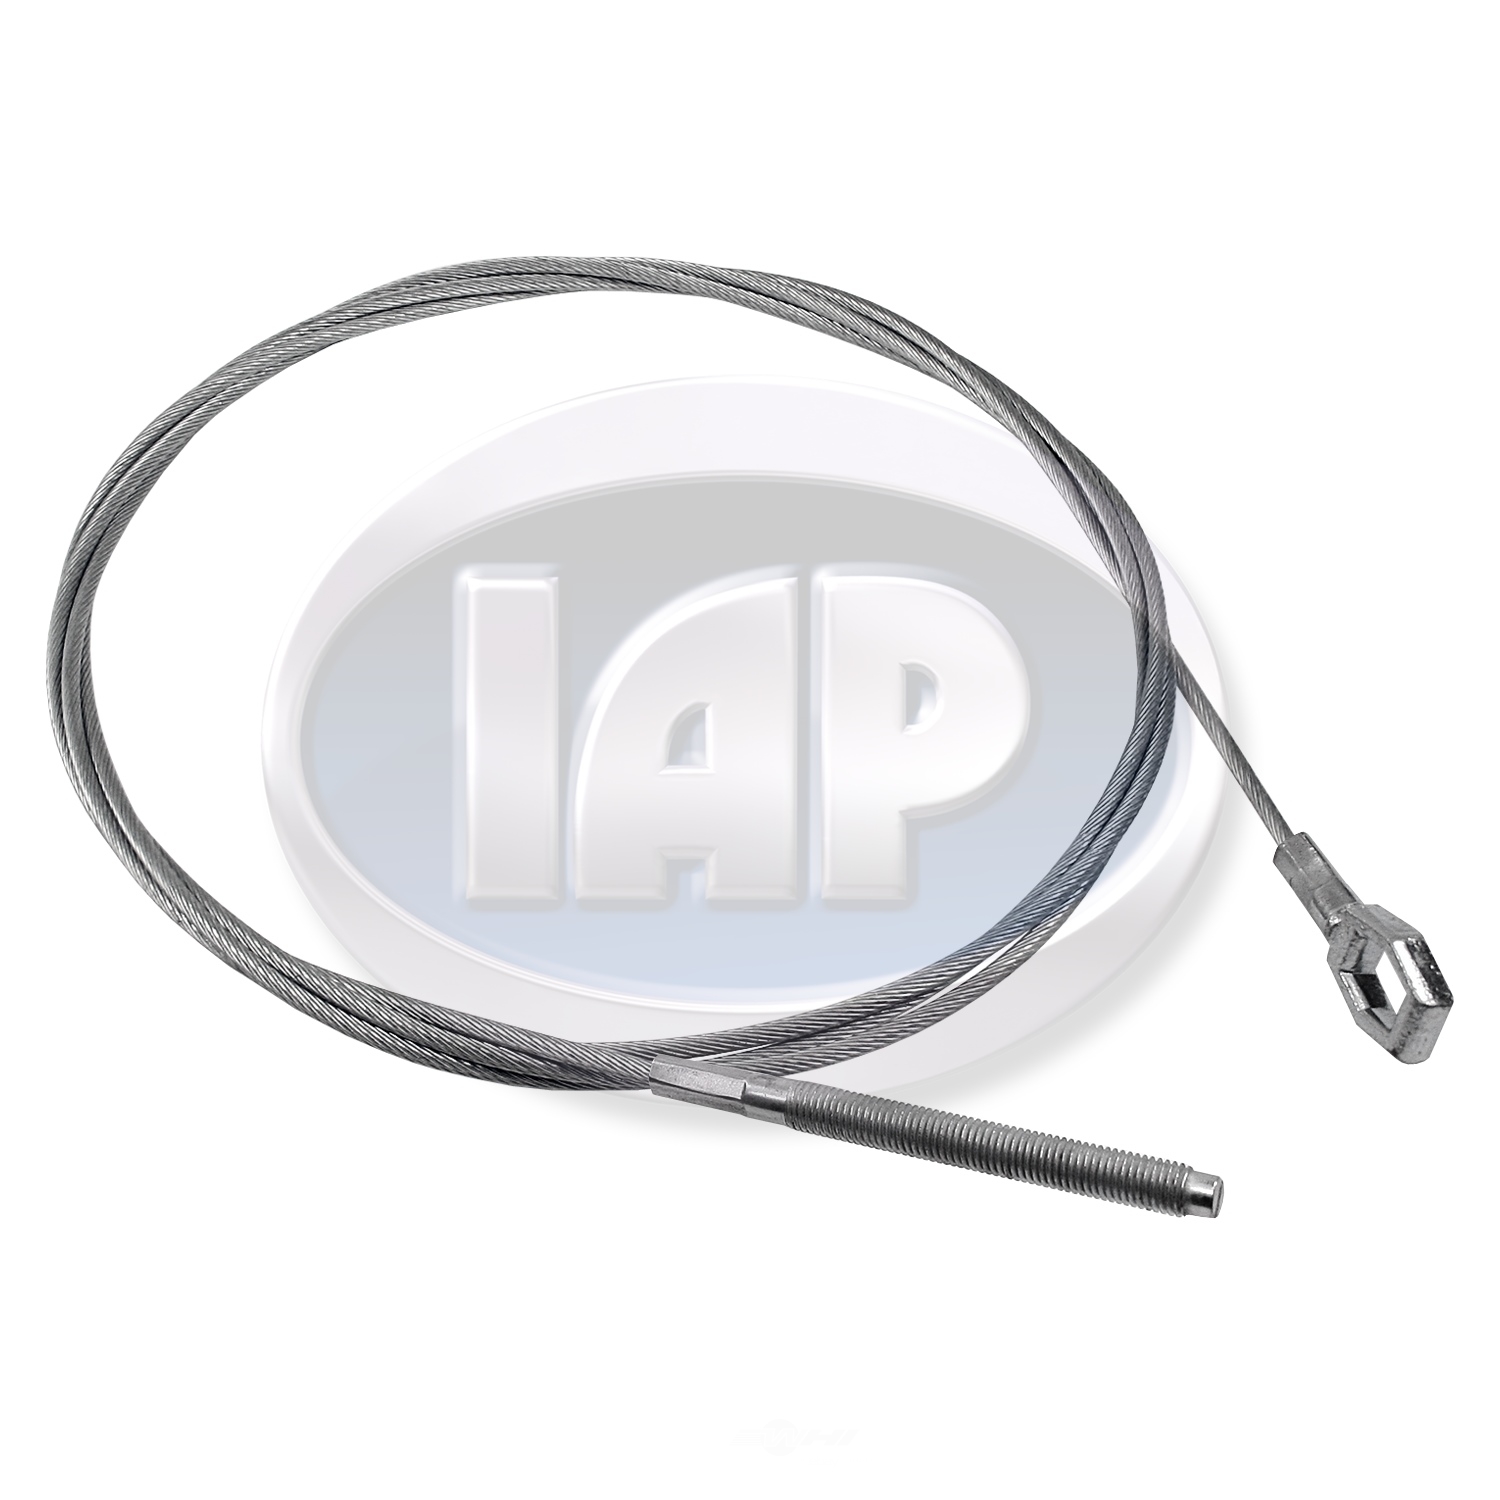 IAP/KUHLTEK MOTORWERKS - Clutch Cable - KMS 111721335